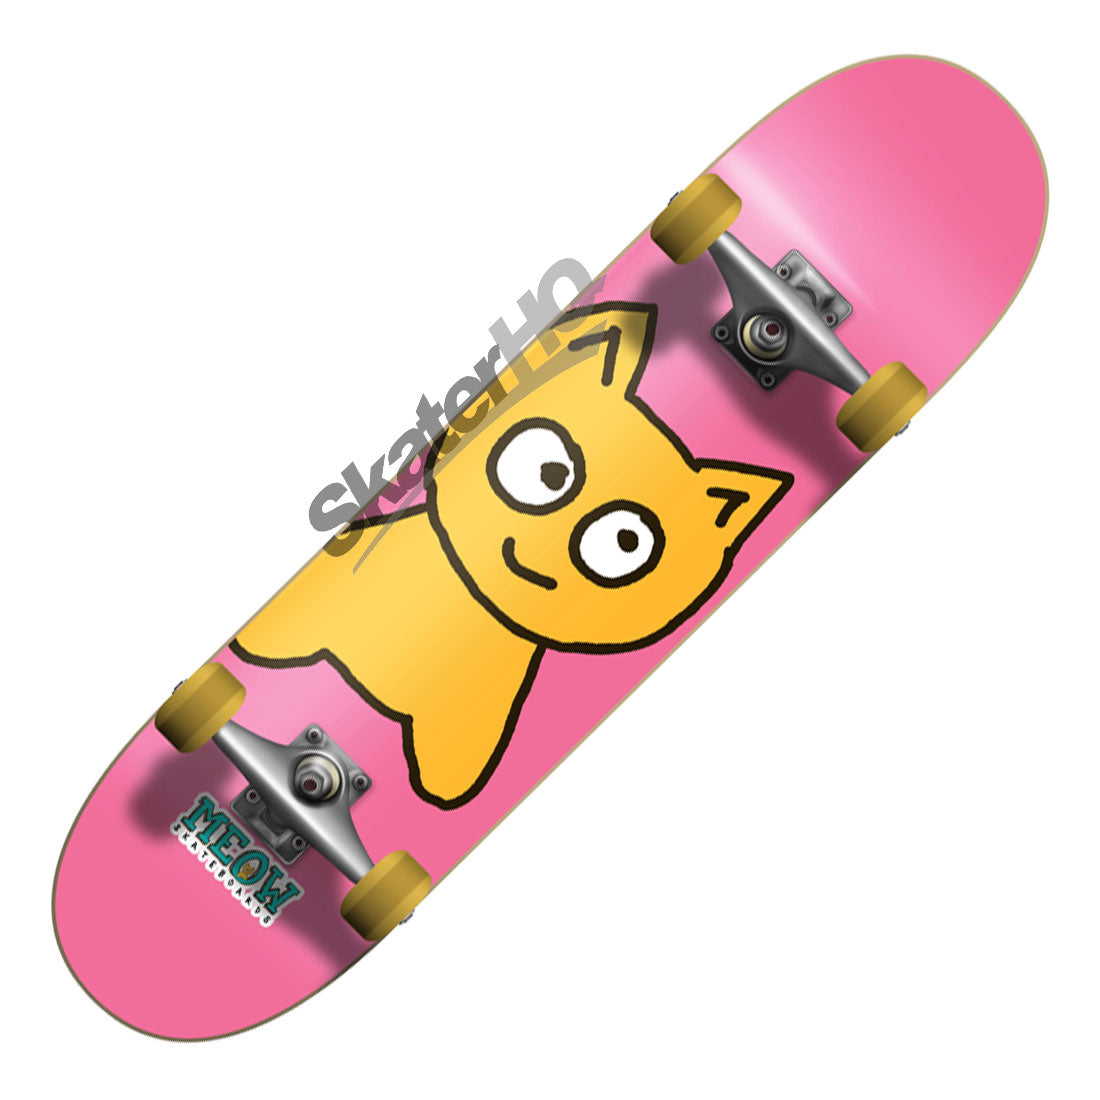 Meow Big Cat 7.75 Complete - Pink Skateboard Completes Modern Street